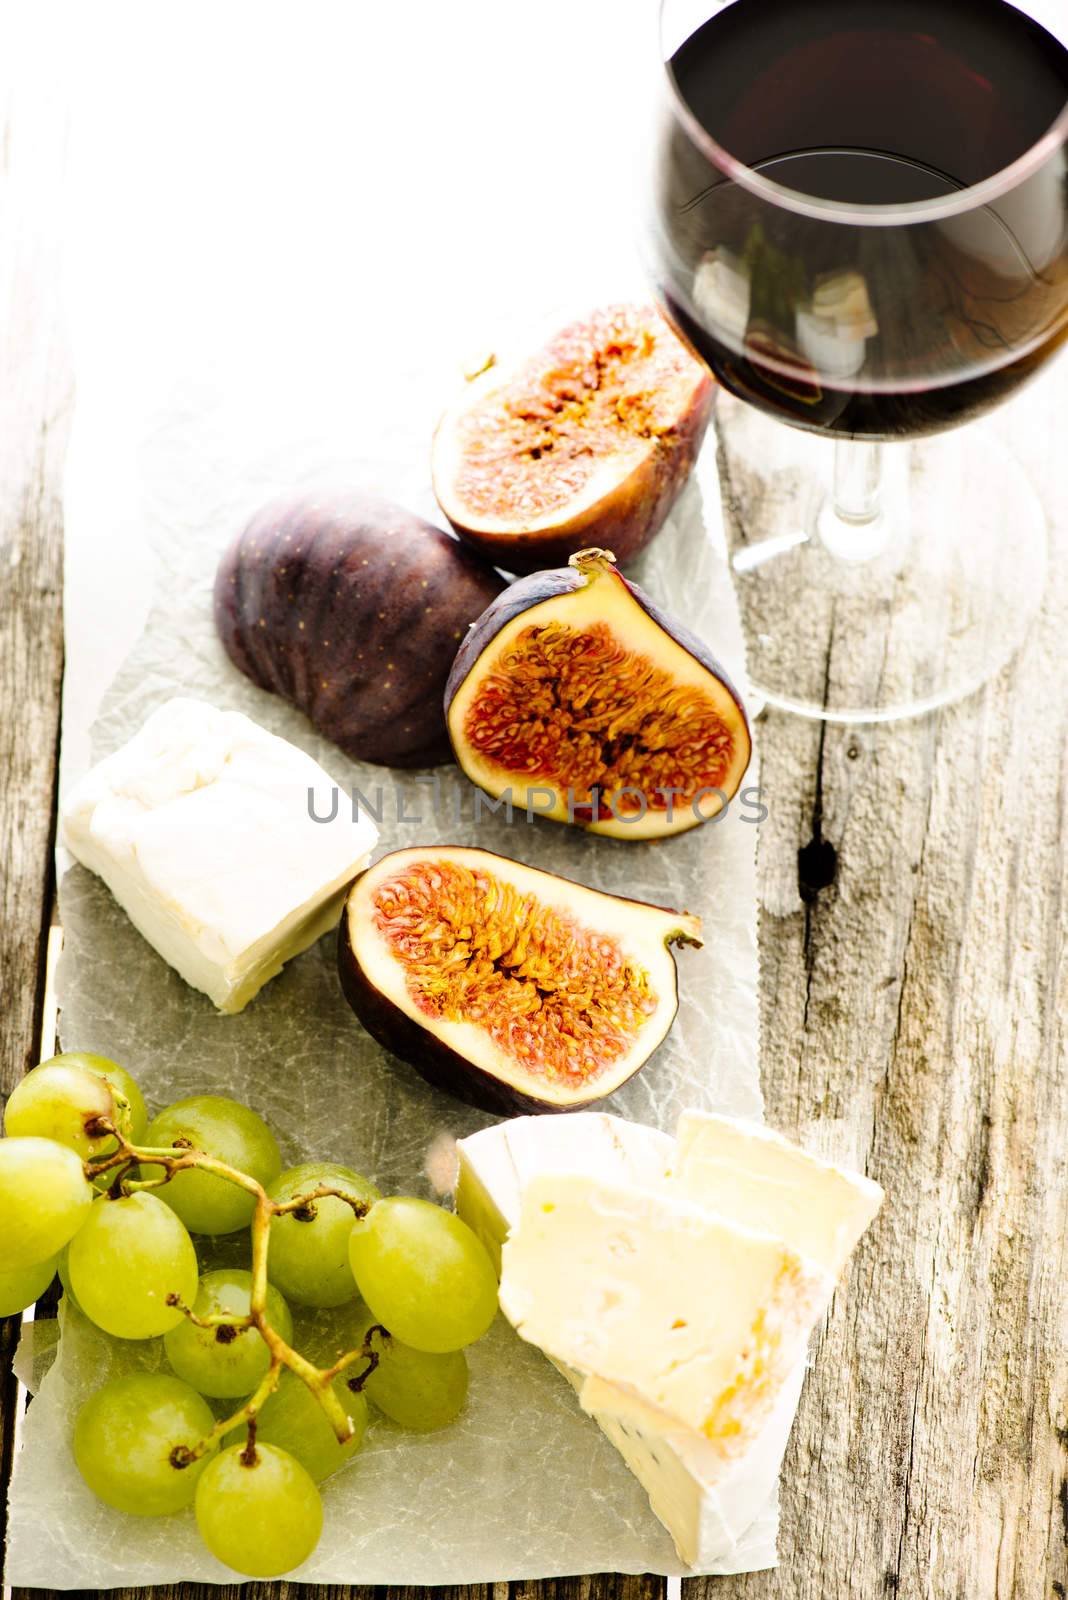 Figs, grape, cheese and glass of wine by Nanisimova